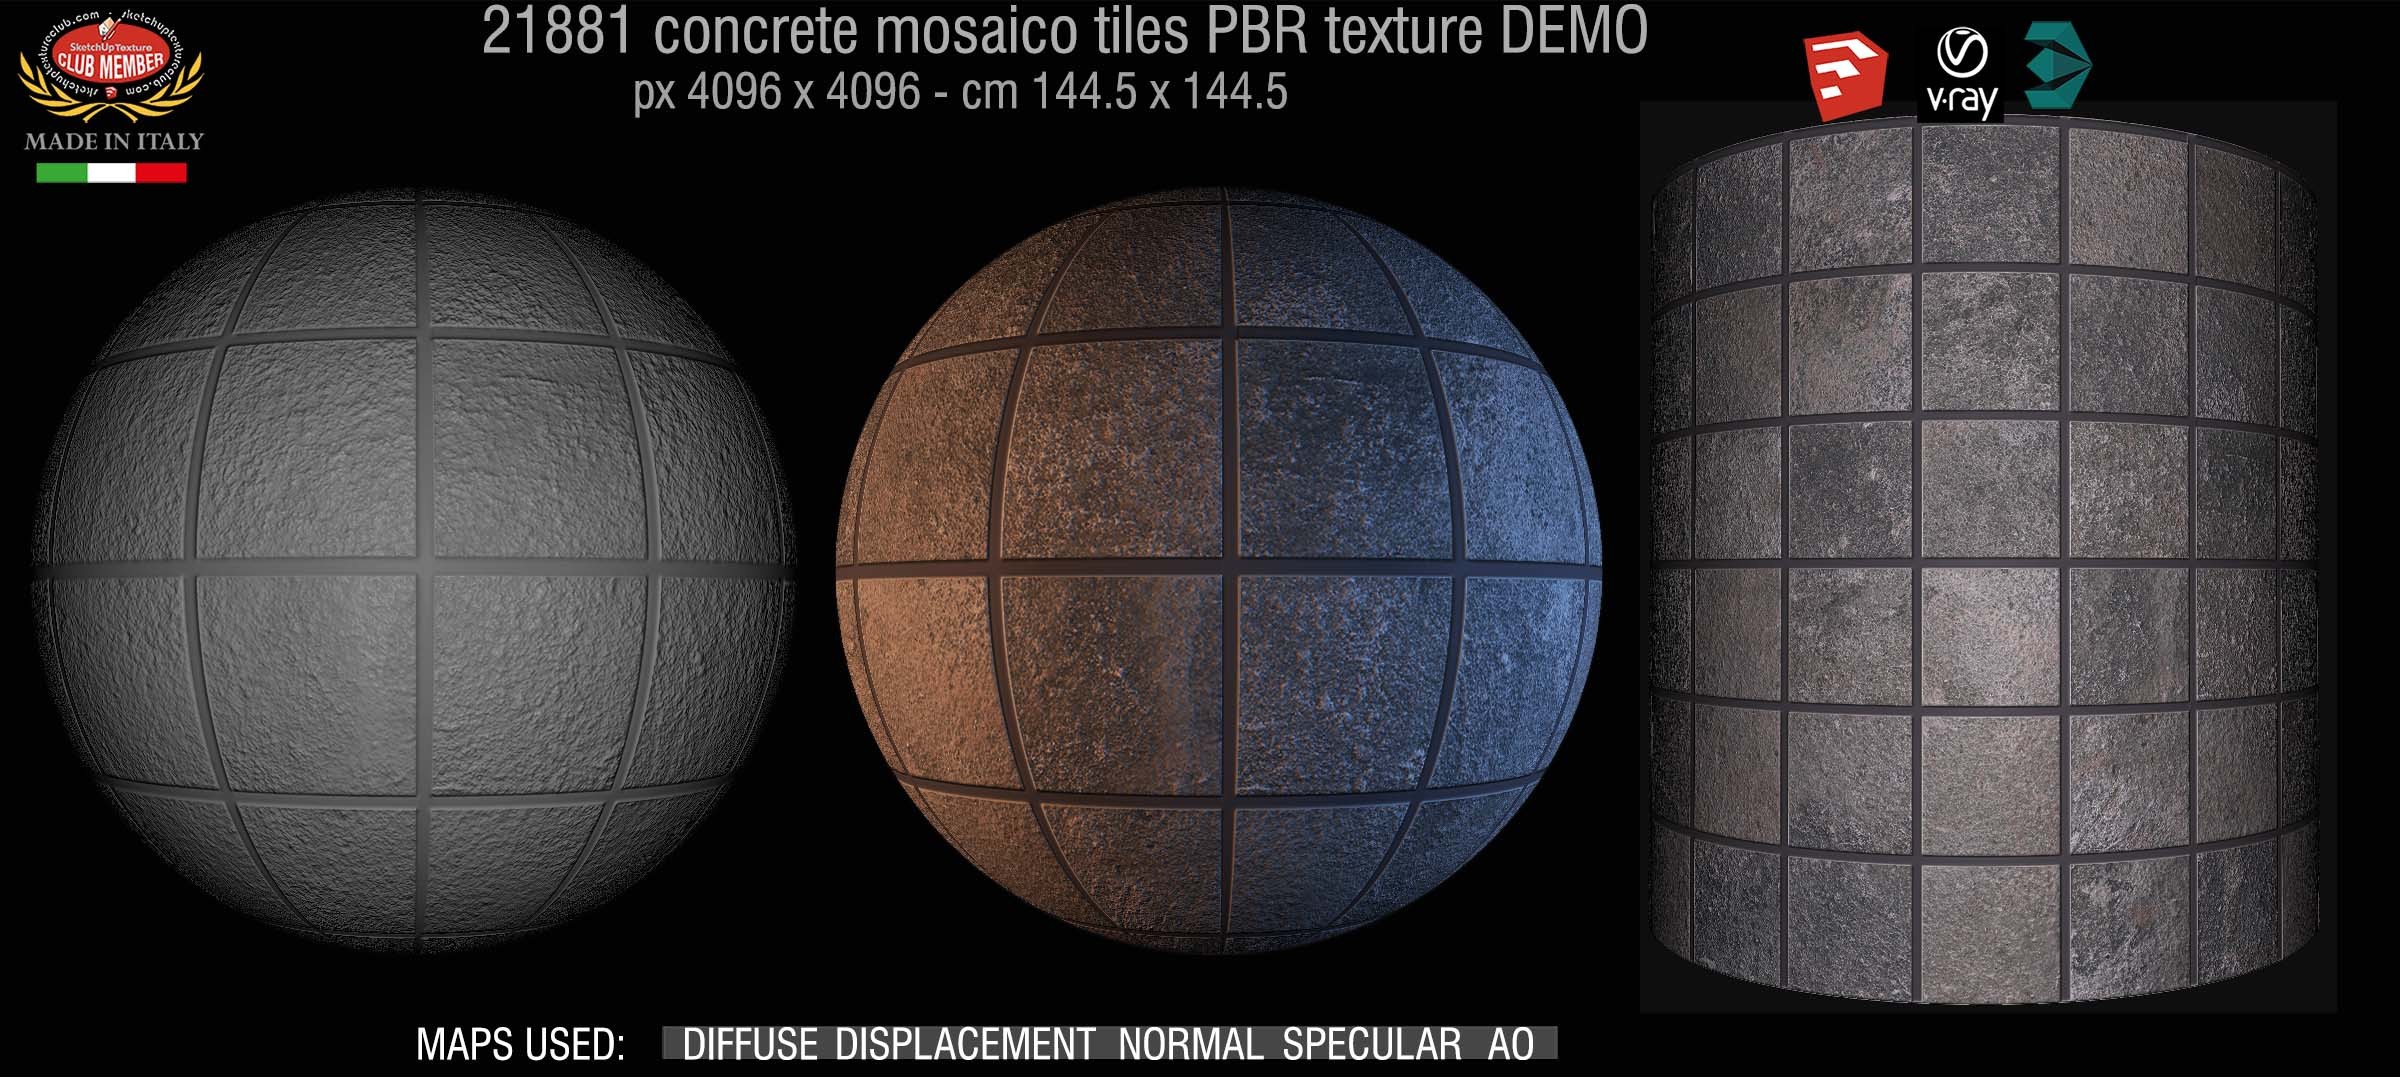 21881 Concrete mosaico tiles PBR texture_seamless